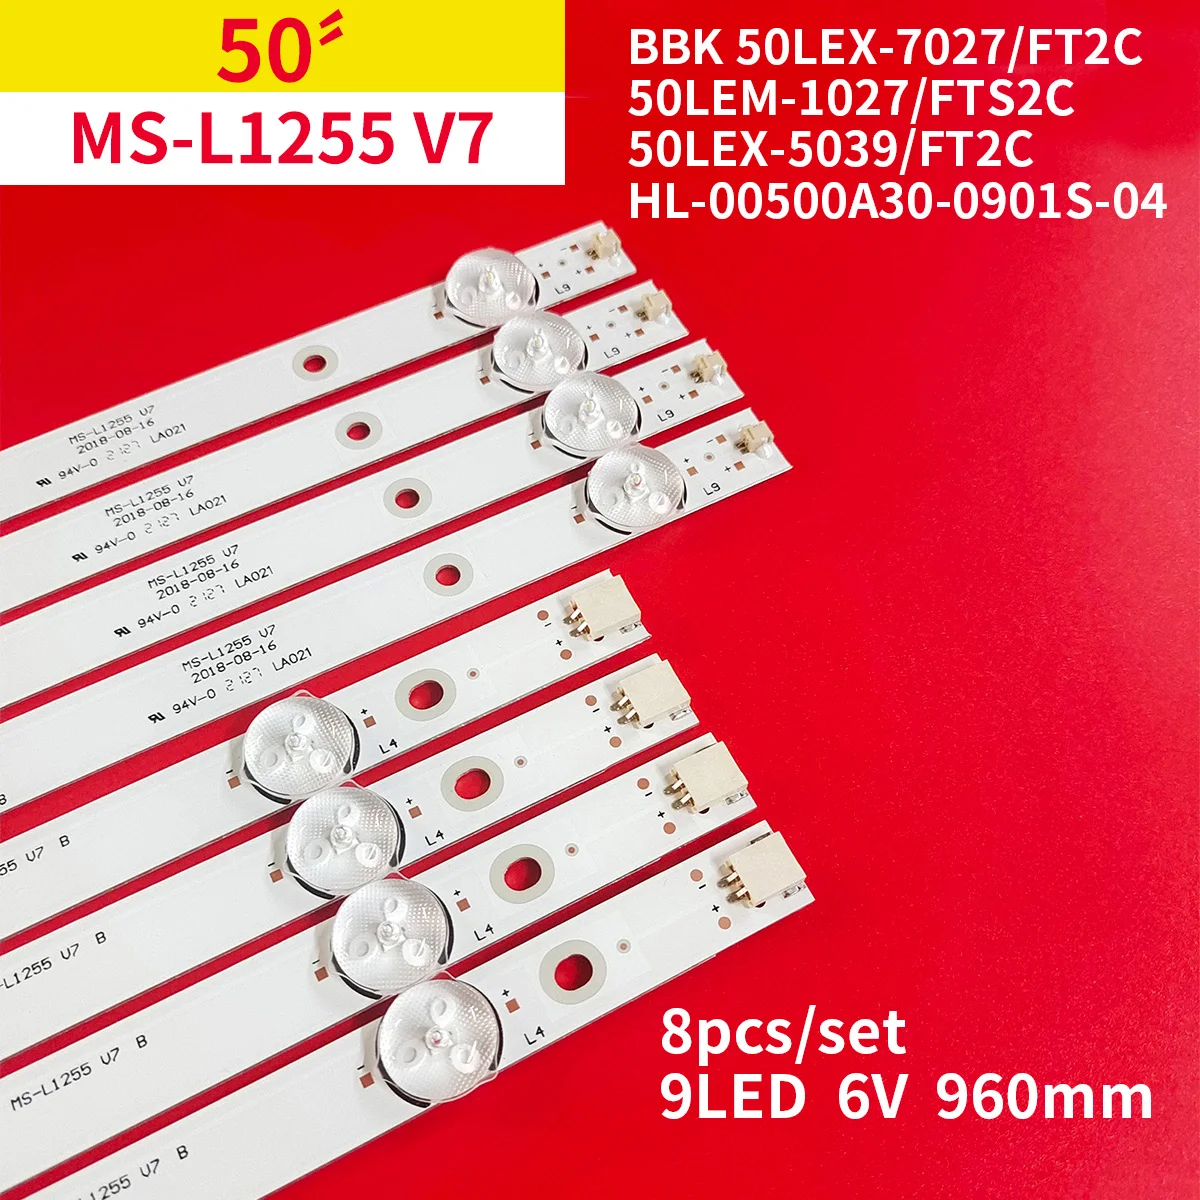 

80Pcs/10Set LED Backlight Strip for 50" TV MS-L1255 V7 Centek CT-8250 UHD K50DLX9US PU50S7XL Holleberg TV's HTV-LED50UHDS100 6V